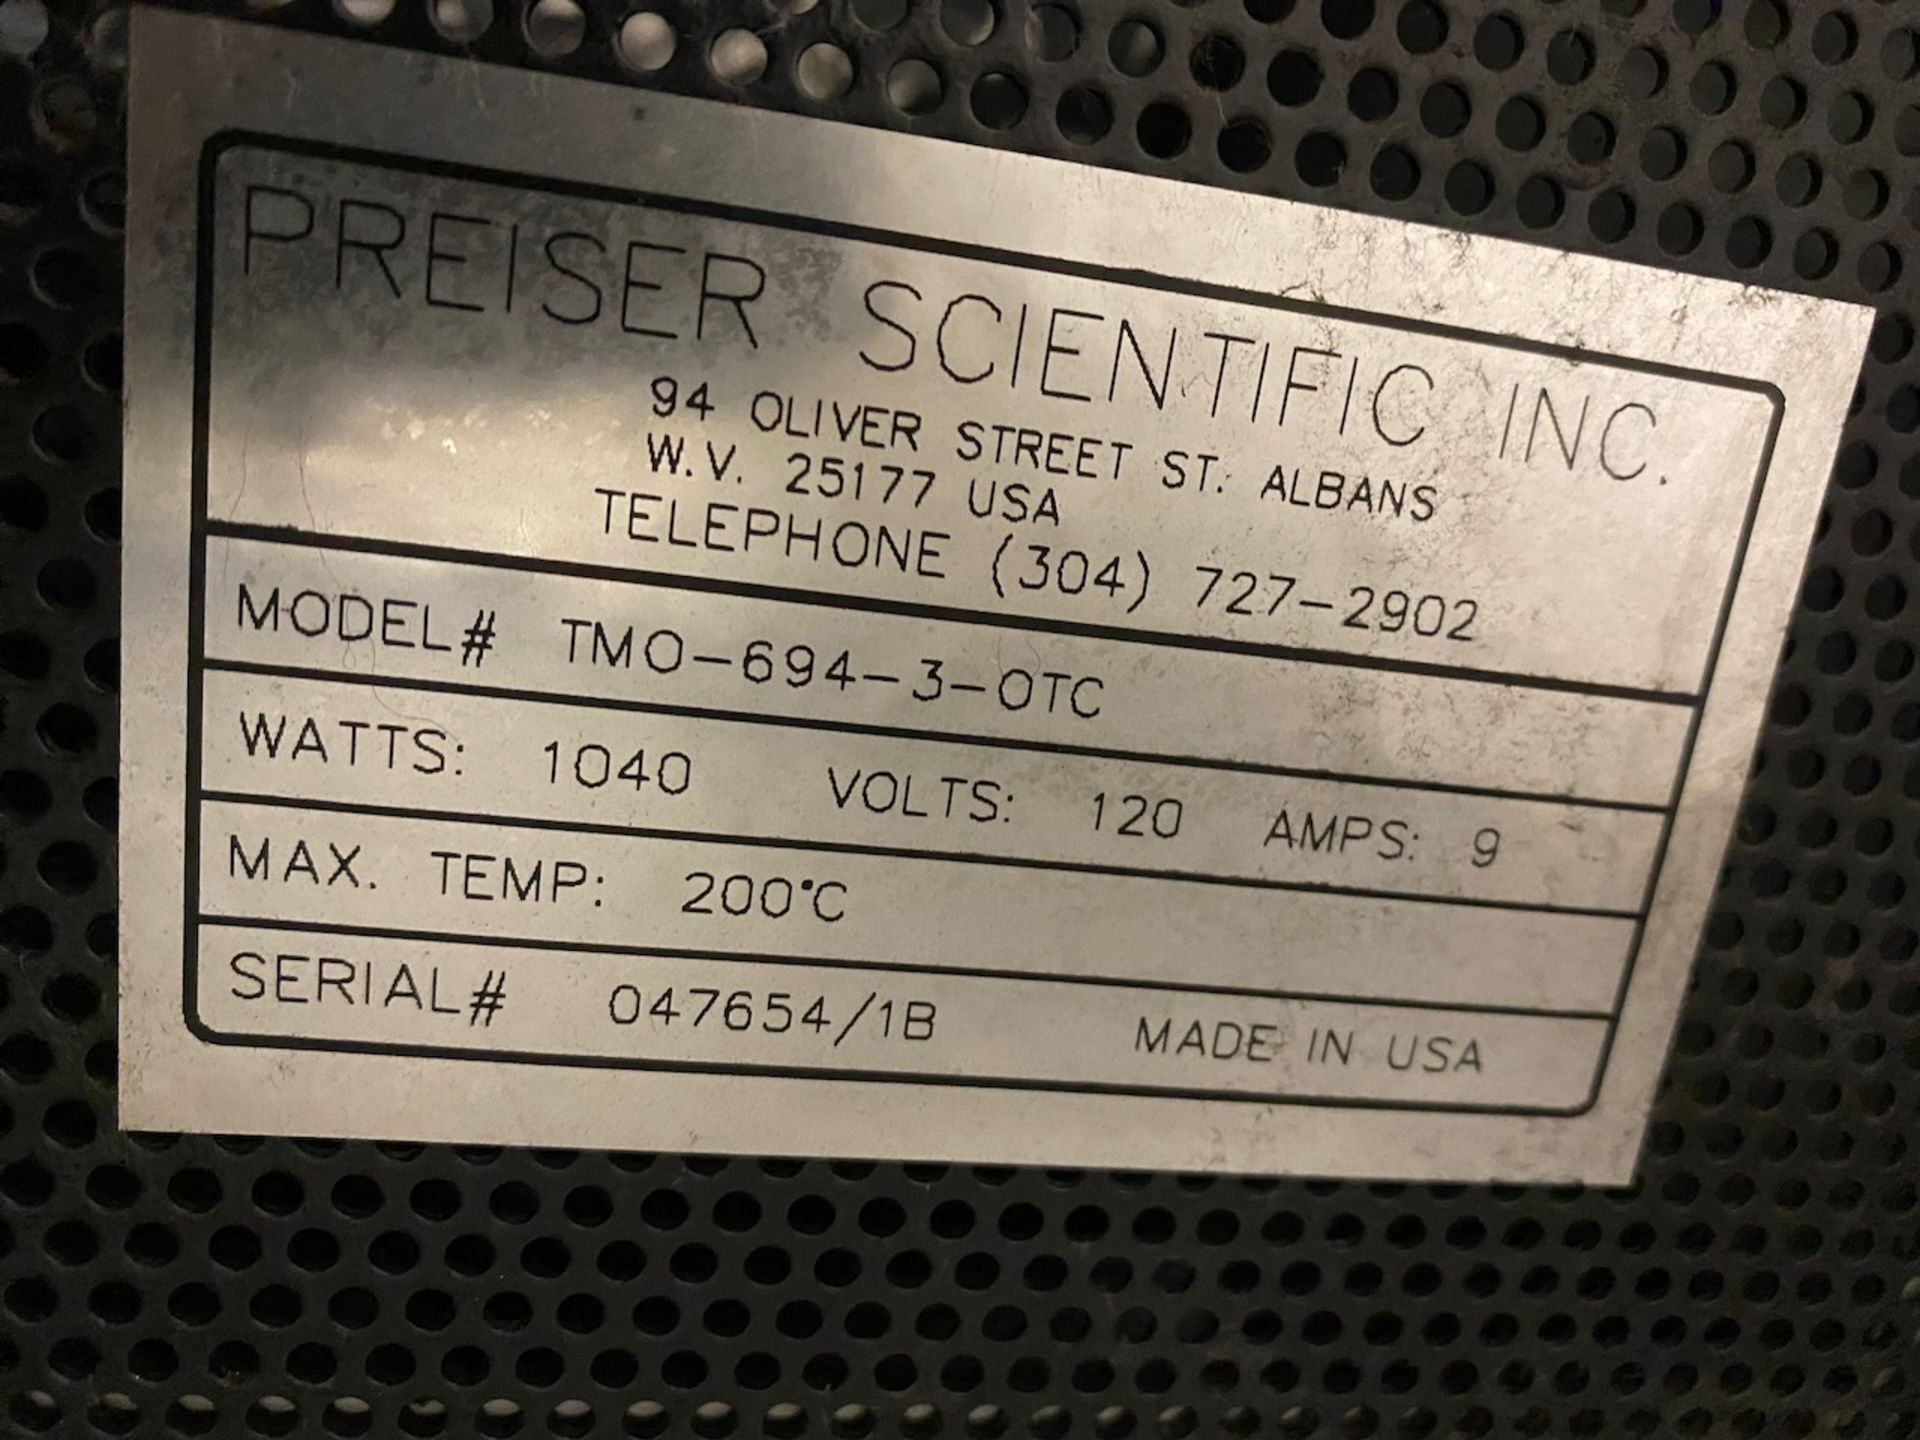 Preiser Scientific 200C oven, model TMO-694-3-OTC, 10" x 8" diameter chamber, S/N 047654/1B. {TAG: - Image 4 of 4